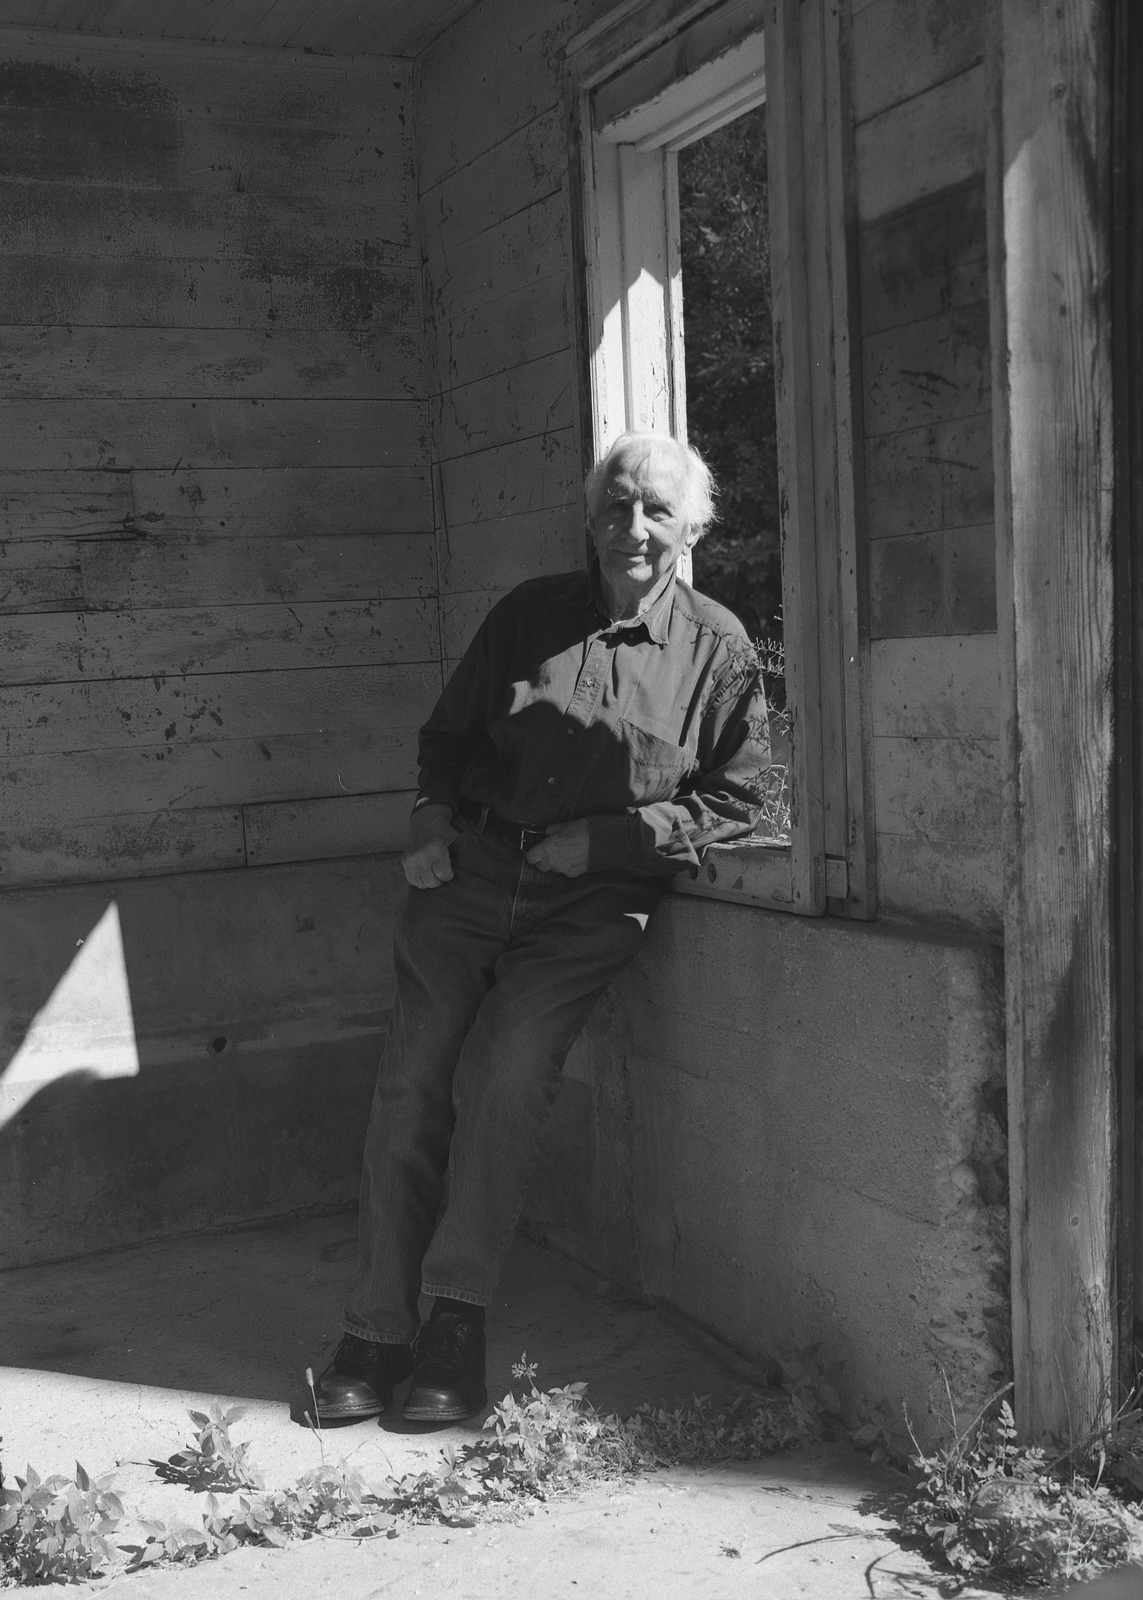 Tom Ferderbar, shed, environmental portrait, daylight, black and white, film 